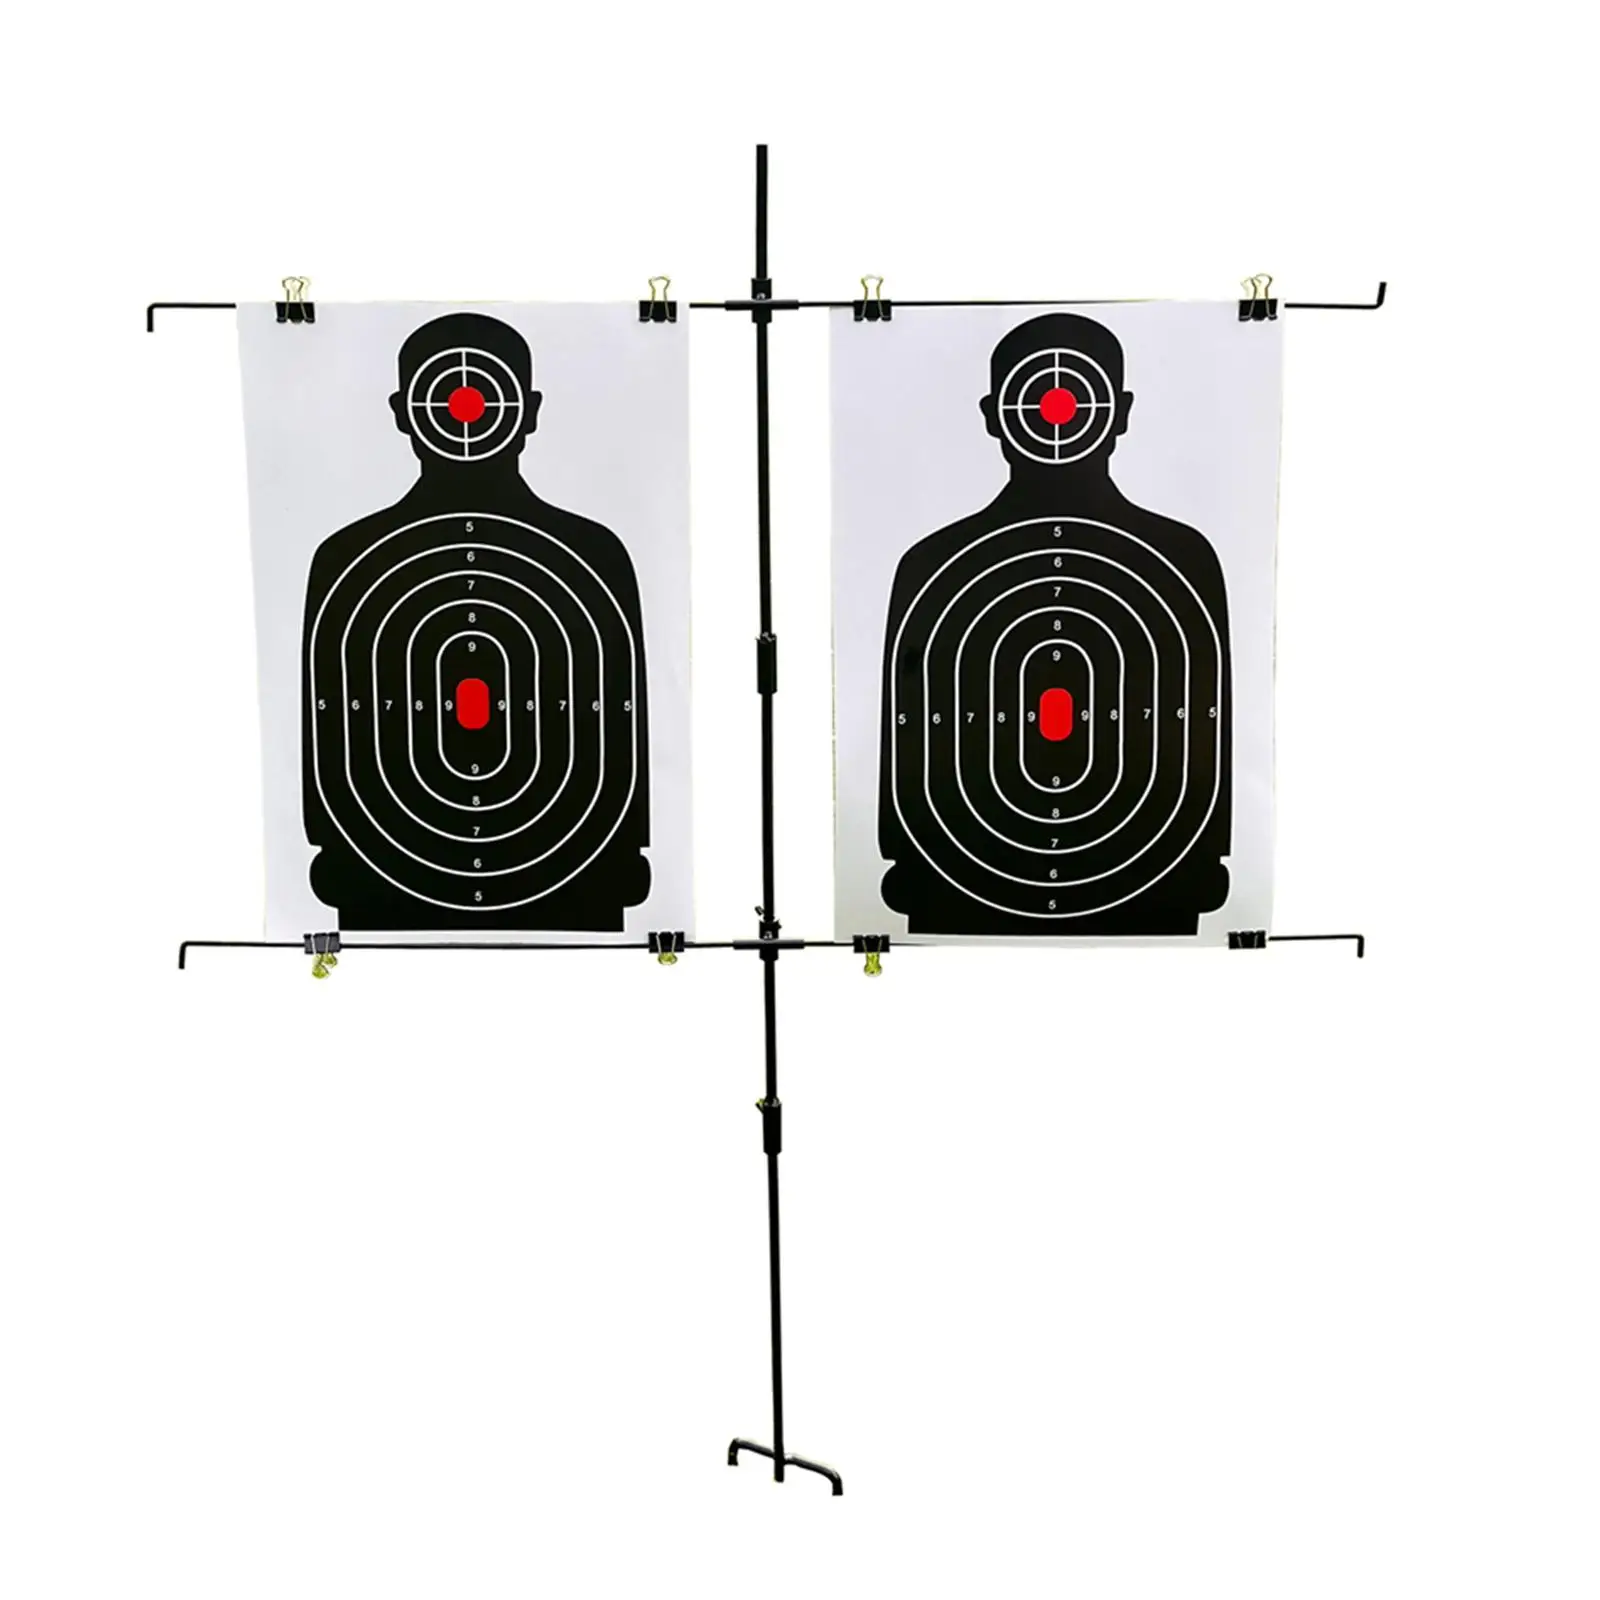 Target Stand Holder Durable Range Practice Paper Target Stand Portable Rack